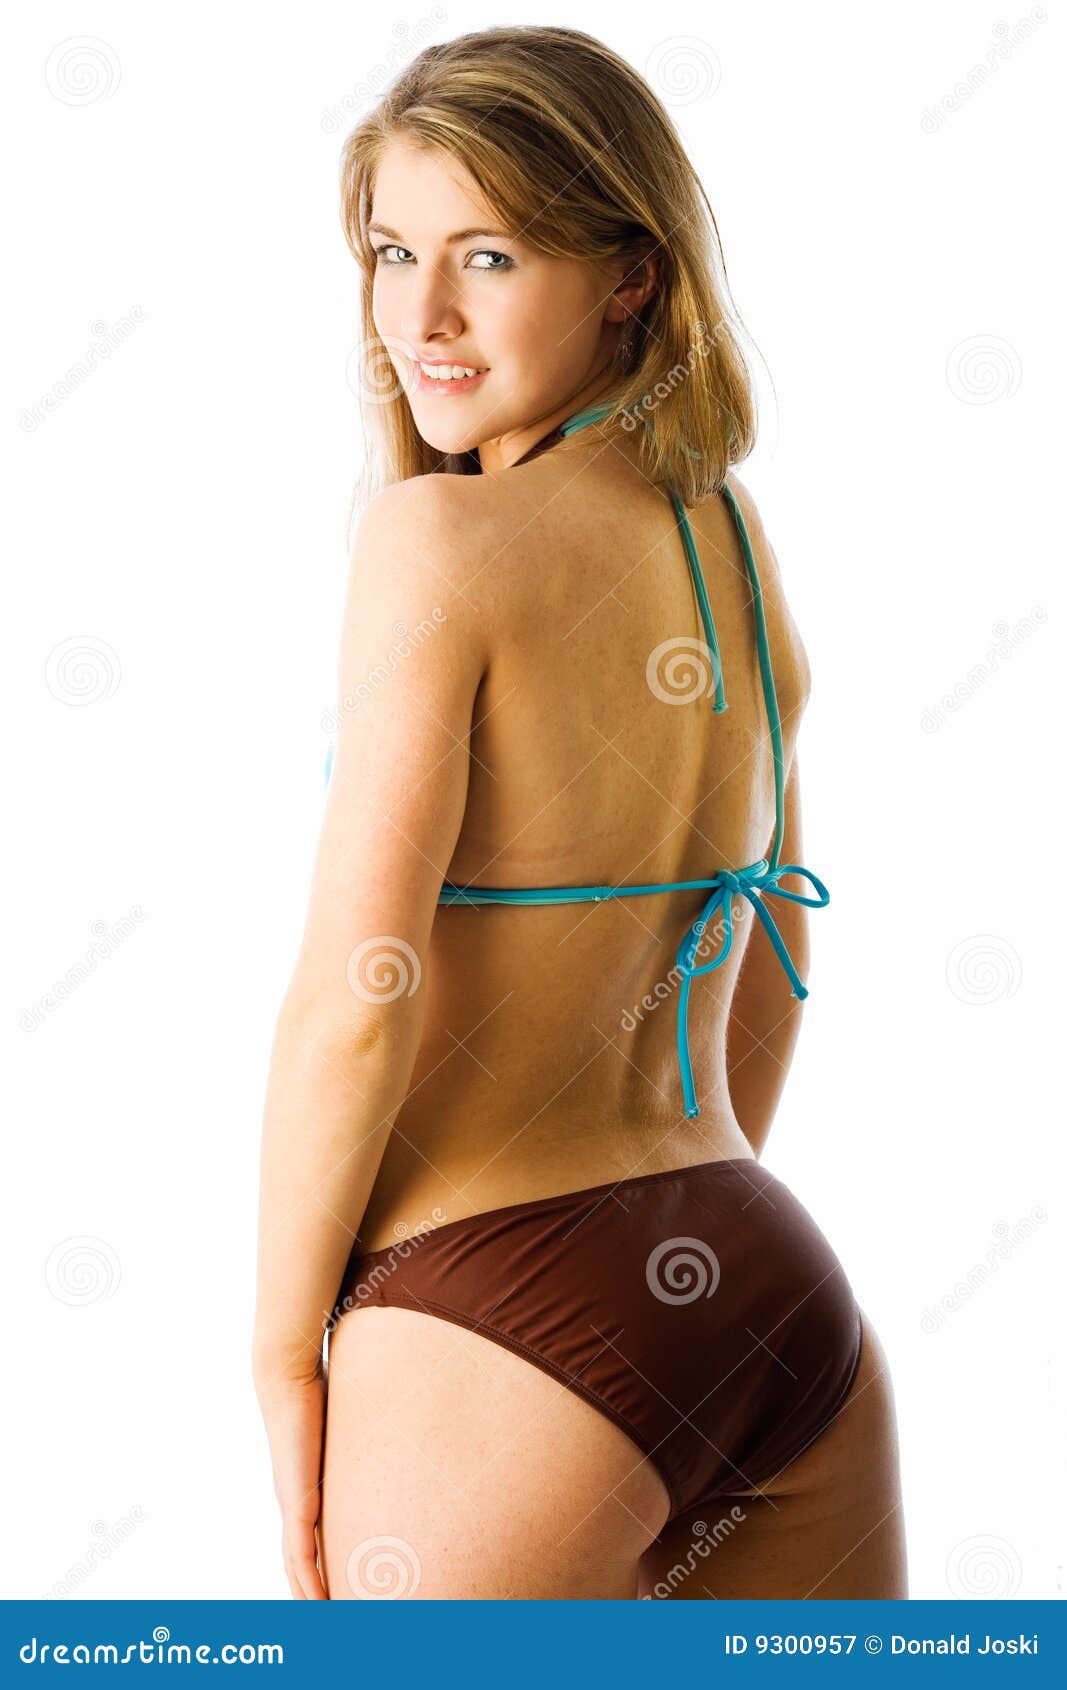 daniel hermawan add college women in bikinis photo